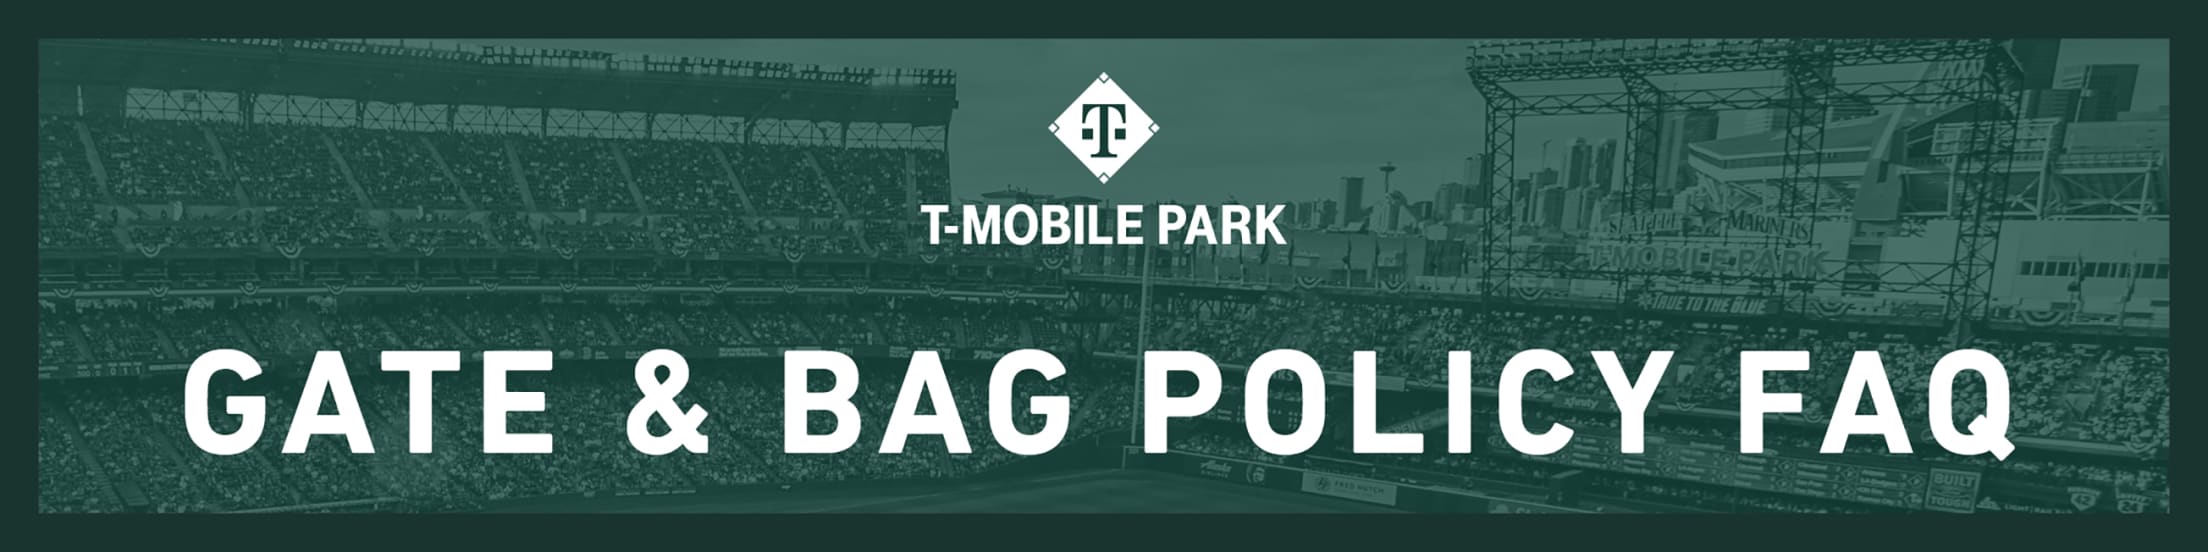 Twins to ban backpacks, big bags at ballpark; no more emptying pockets